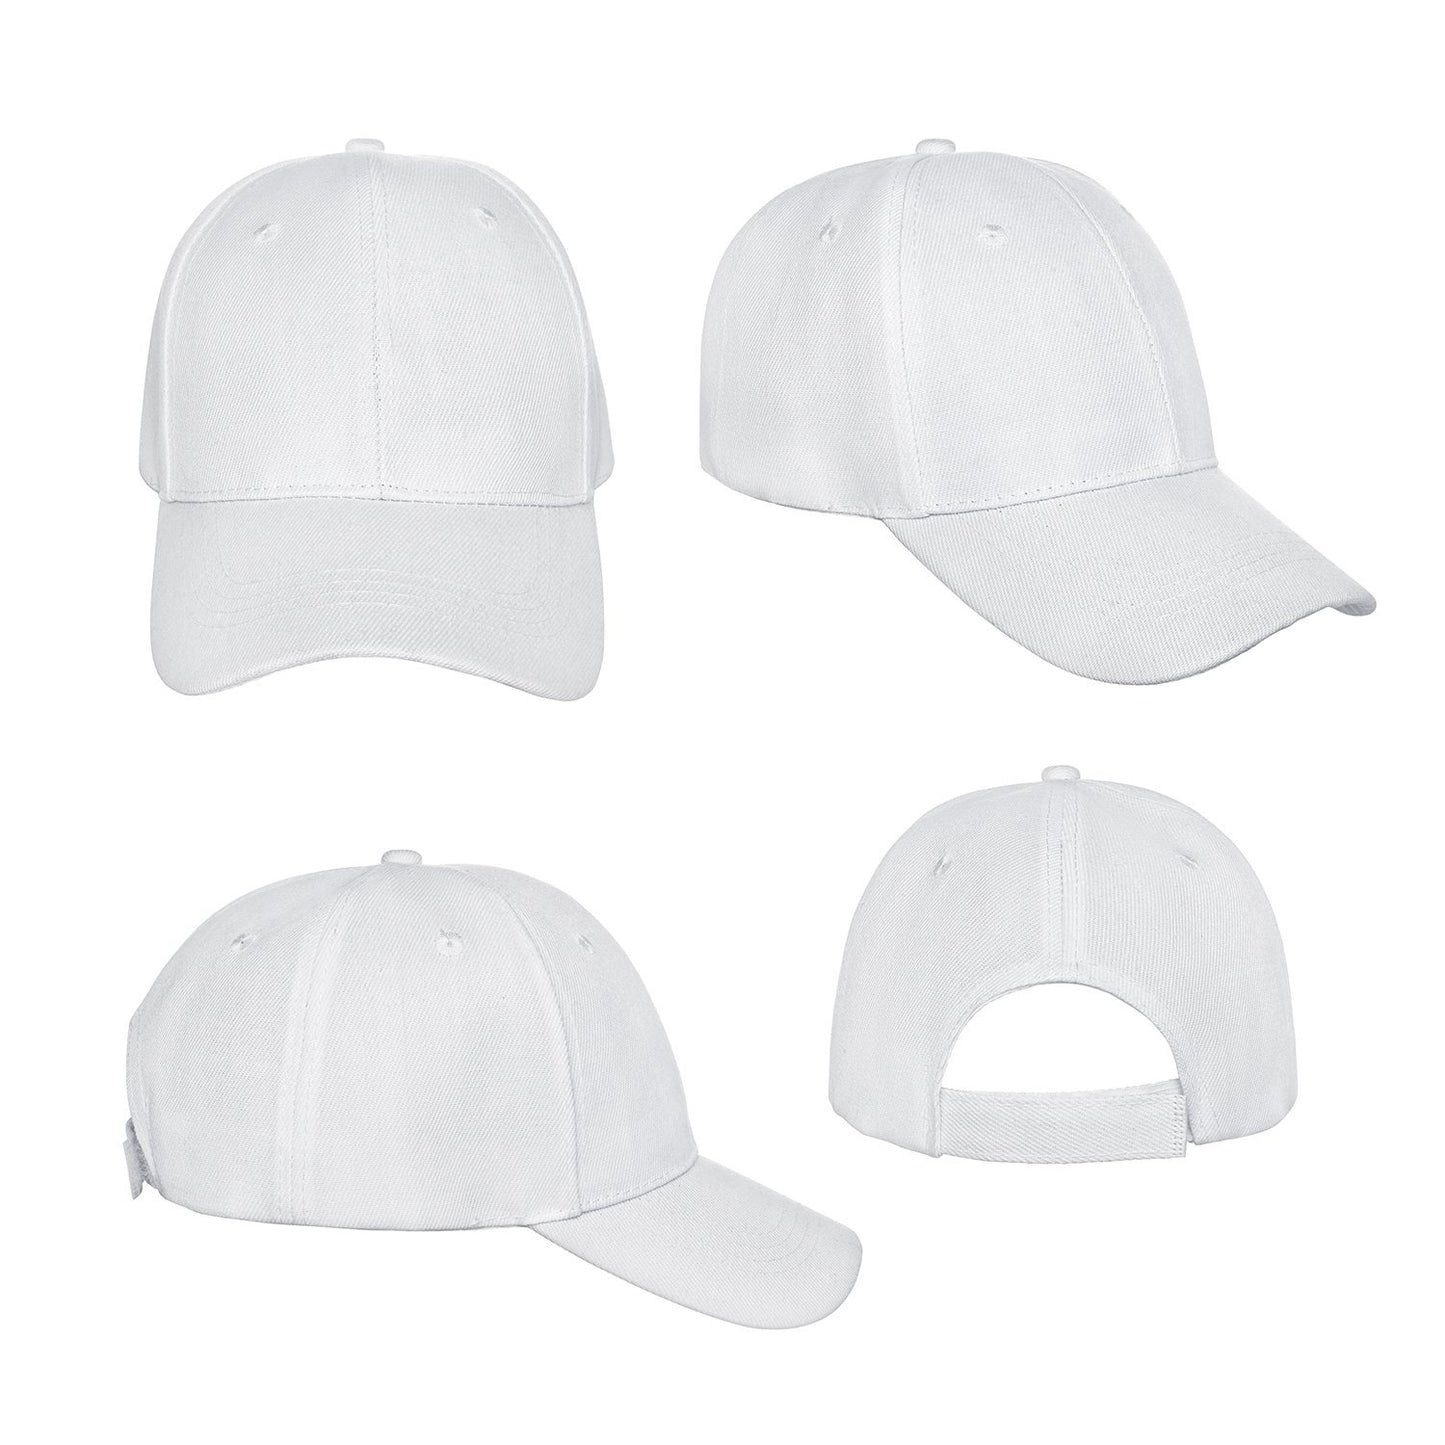 Baseball Caps Black 3 Pack  Accessories